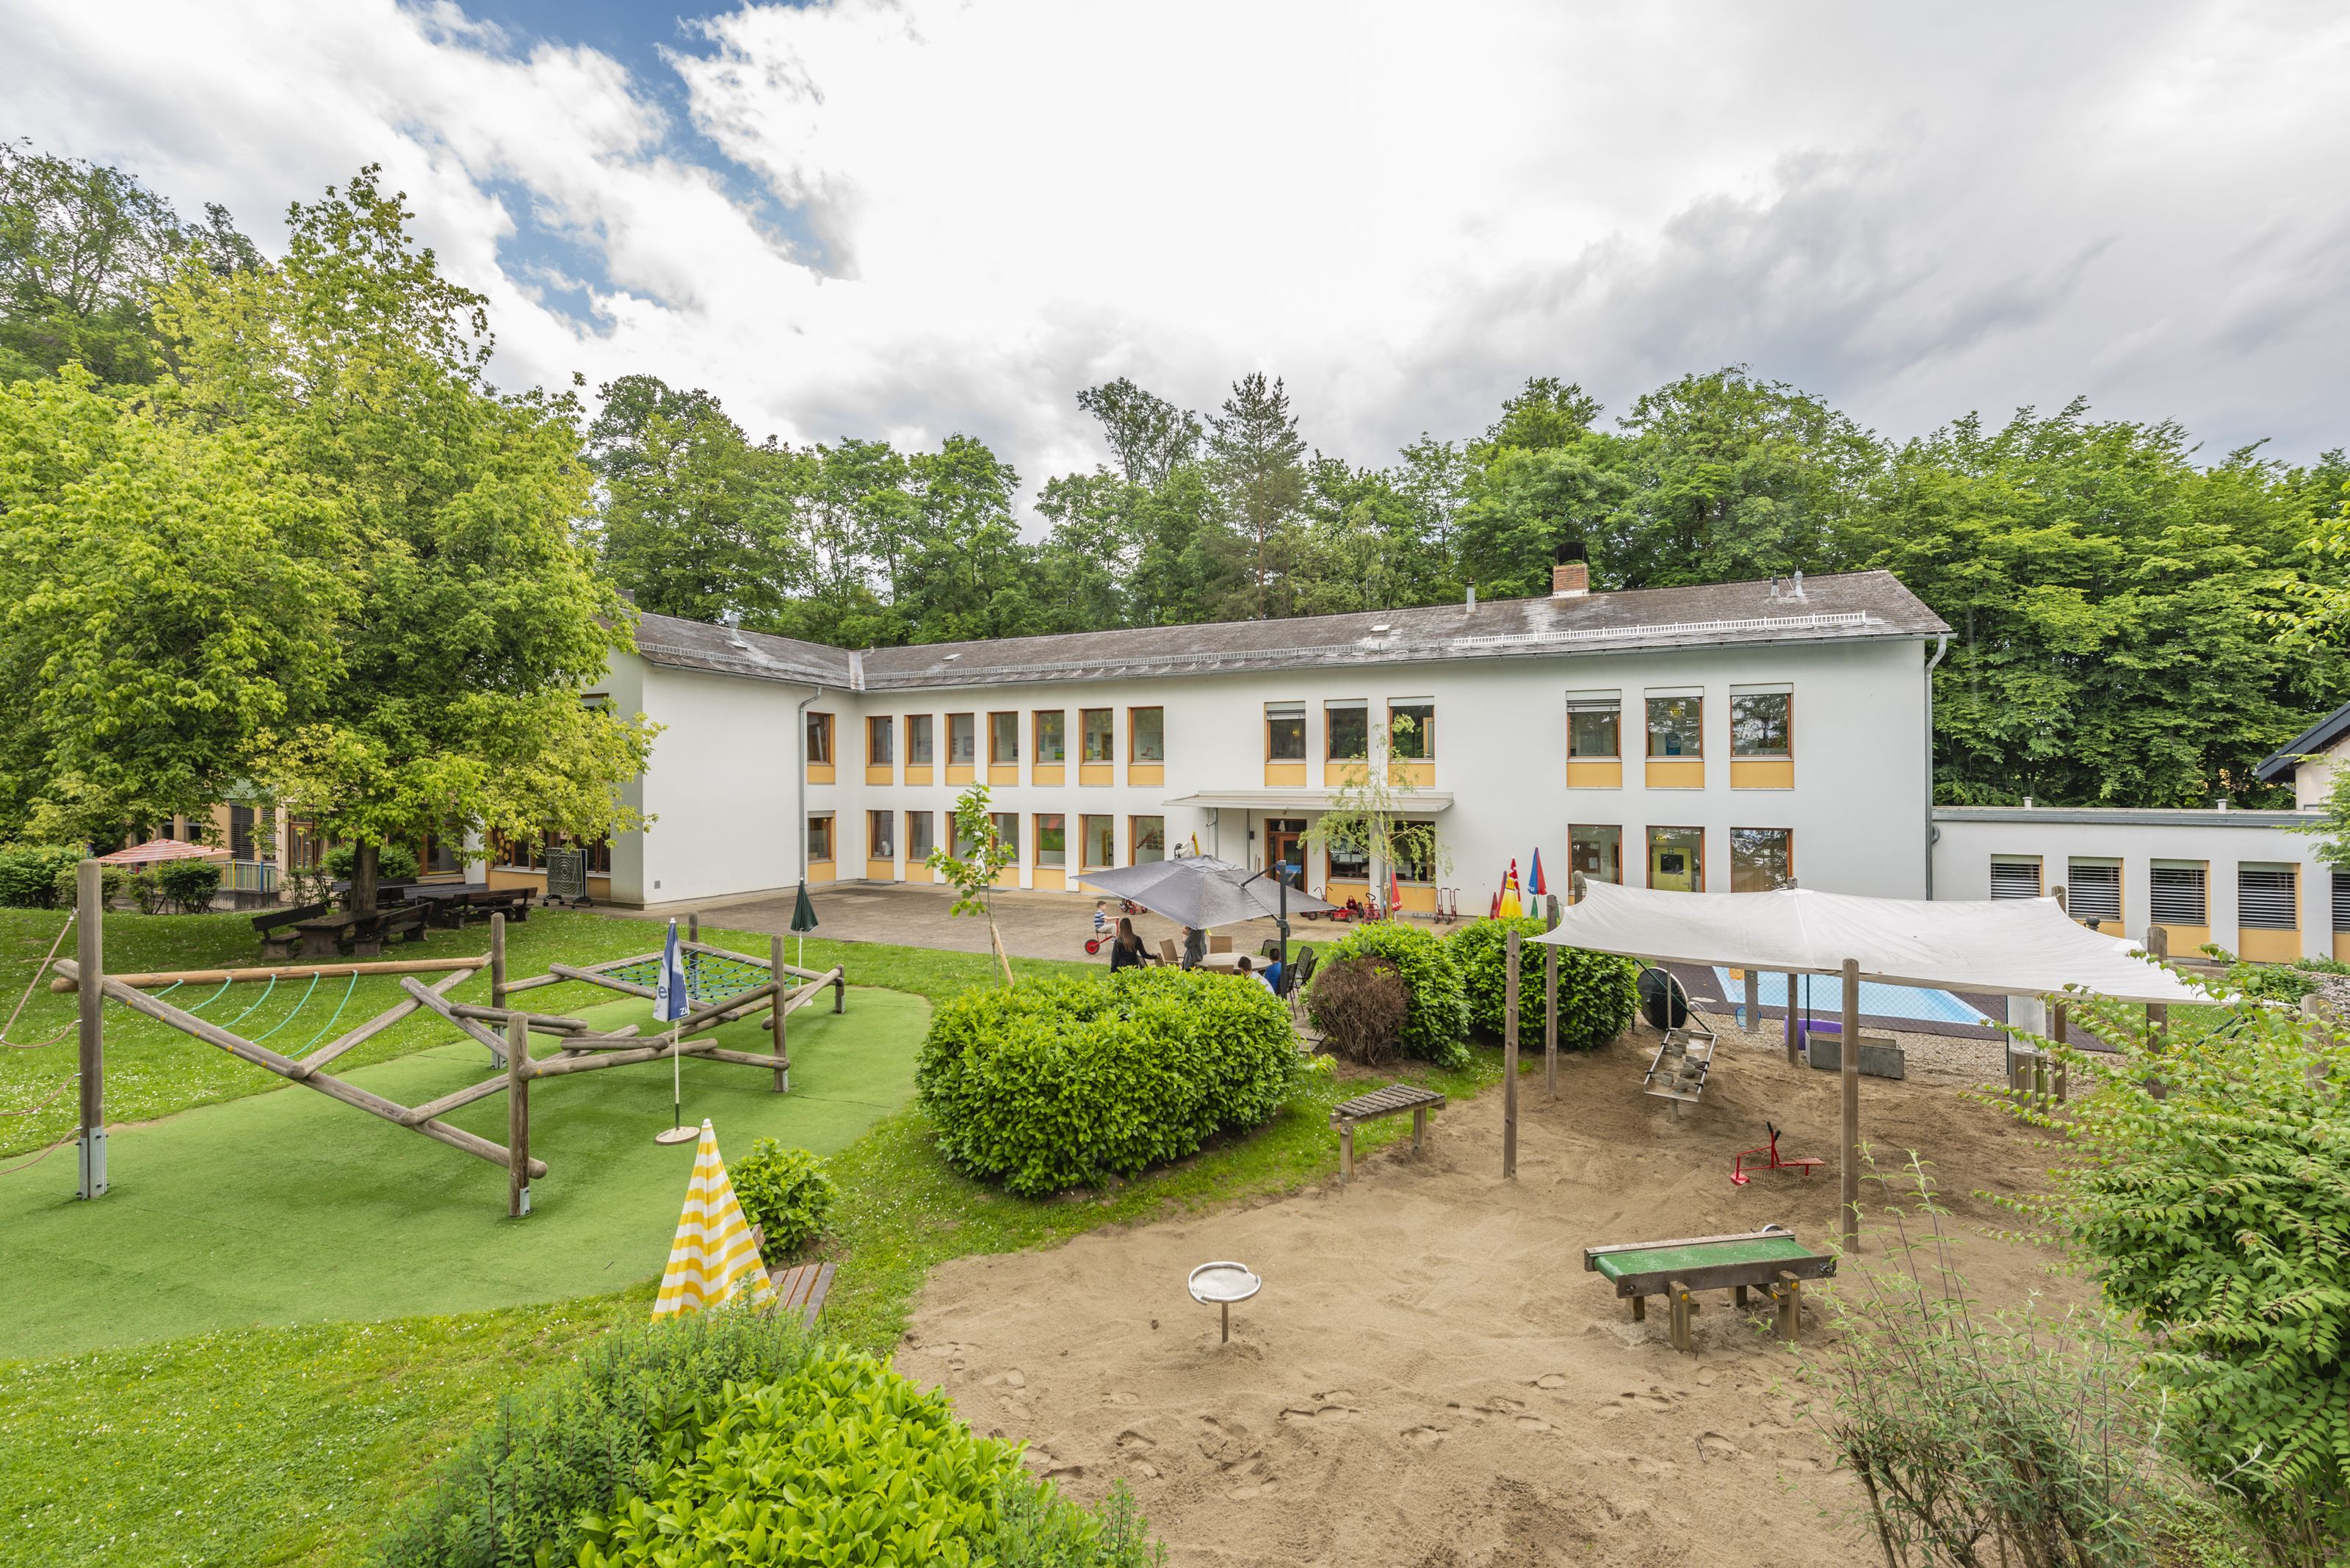 Sonderschule Rosenhain - Spielplatz